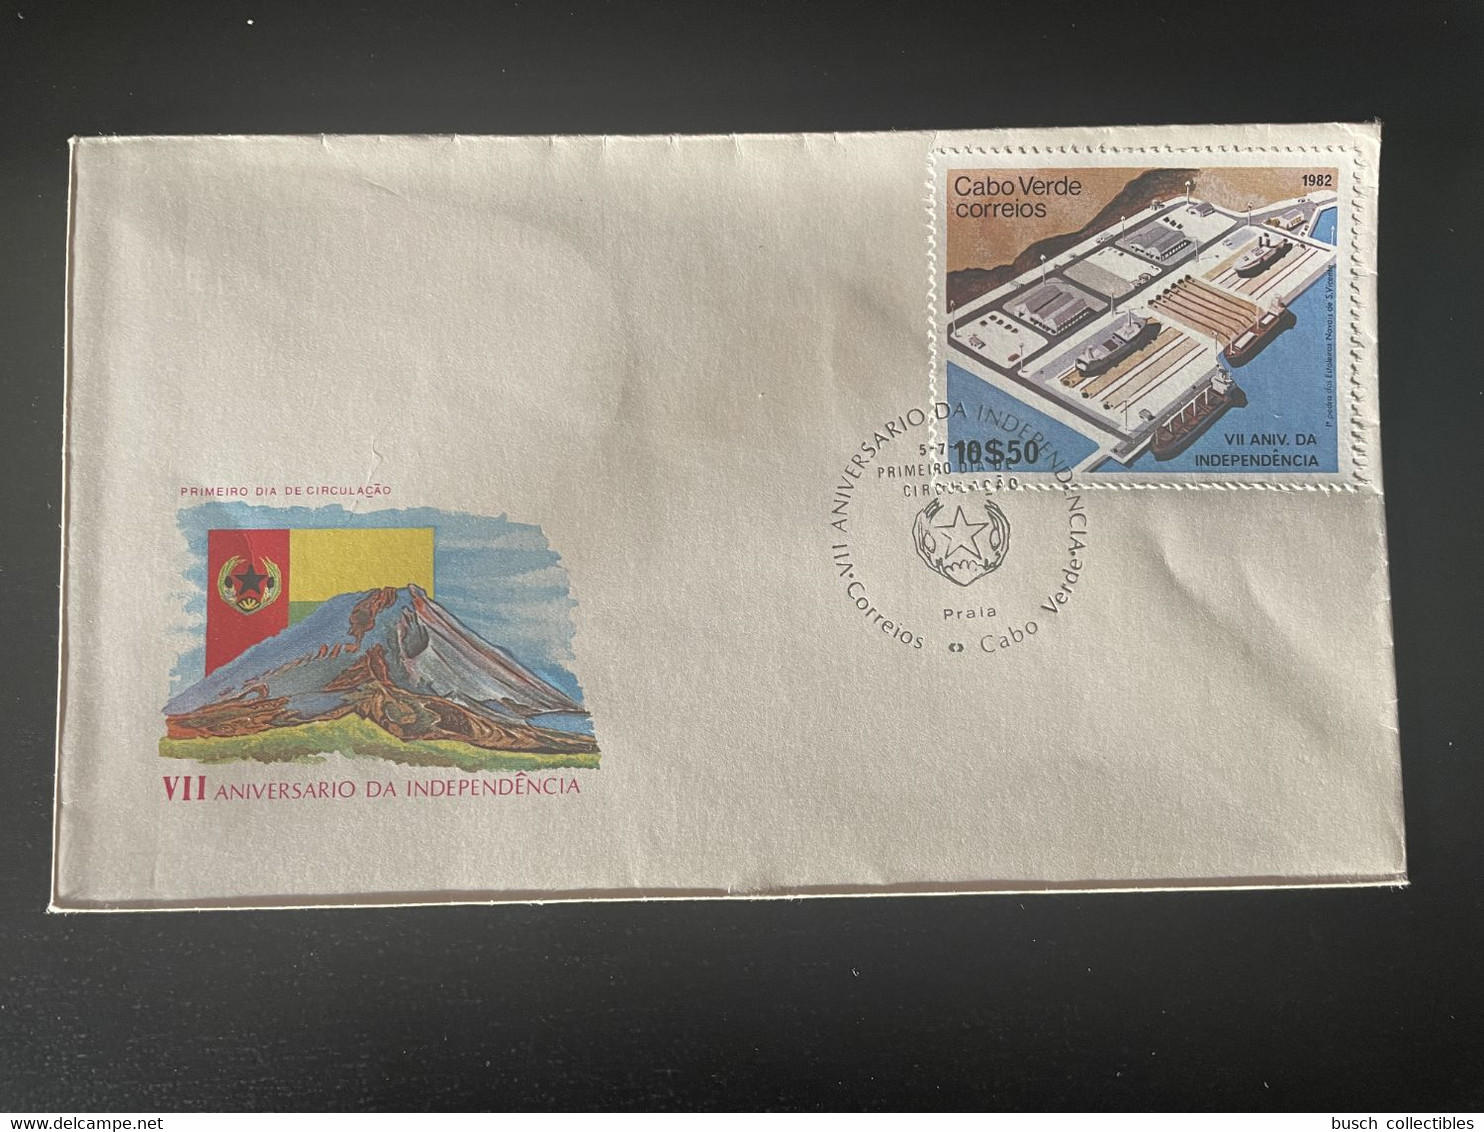 Cape Verde Cabo Verde 1982 Mi. 465 FDC Independencia Independance Unabhängigkeit Bateau Ship Schiff Flag Drapeau - Enveloppes